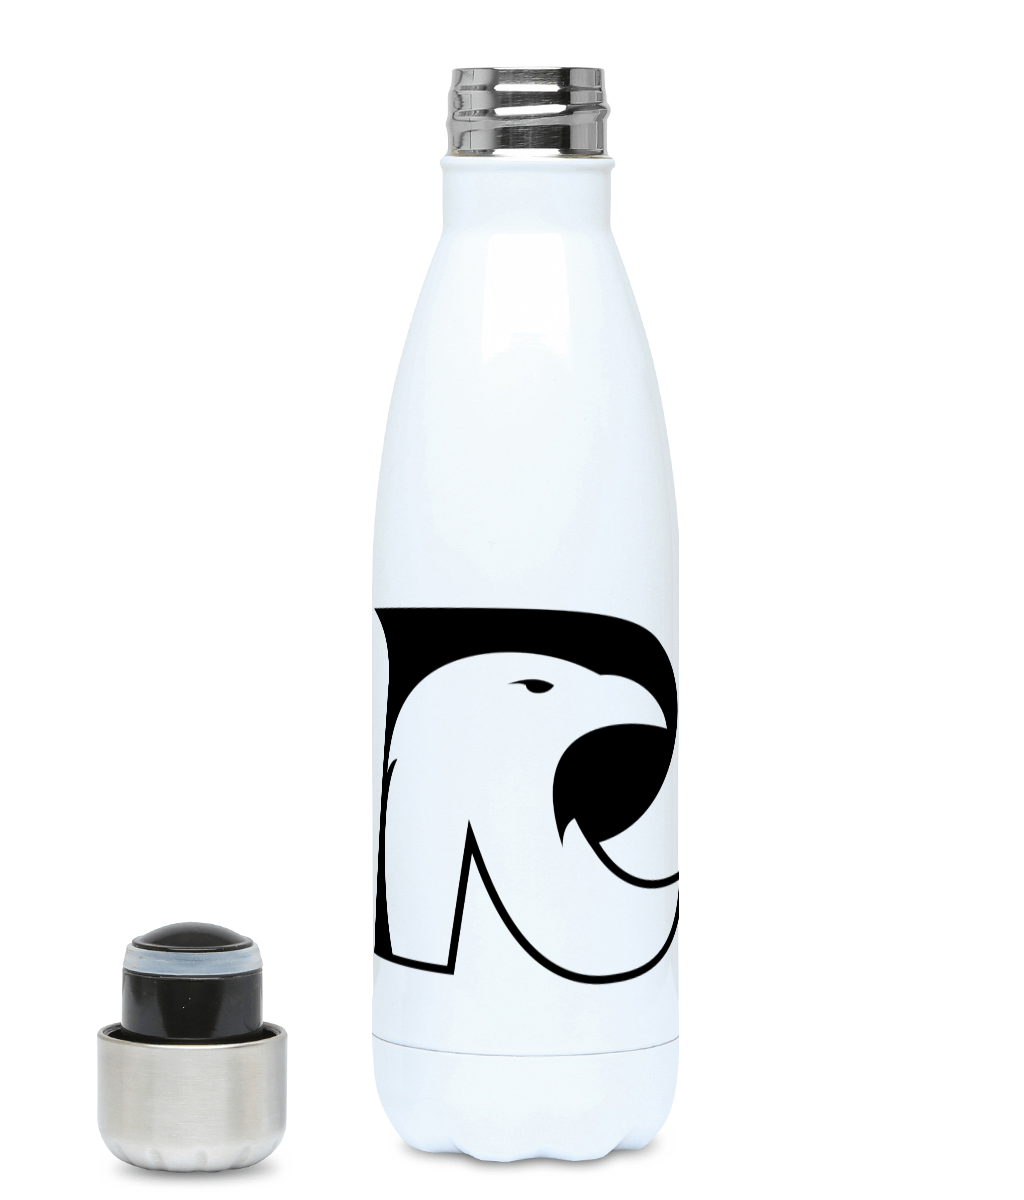 Rob Raven 500ml Water Bottle